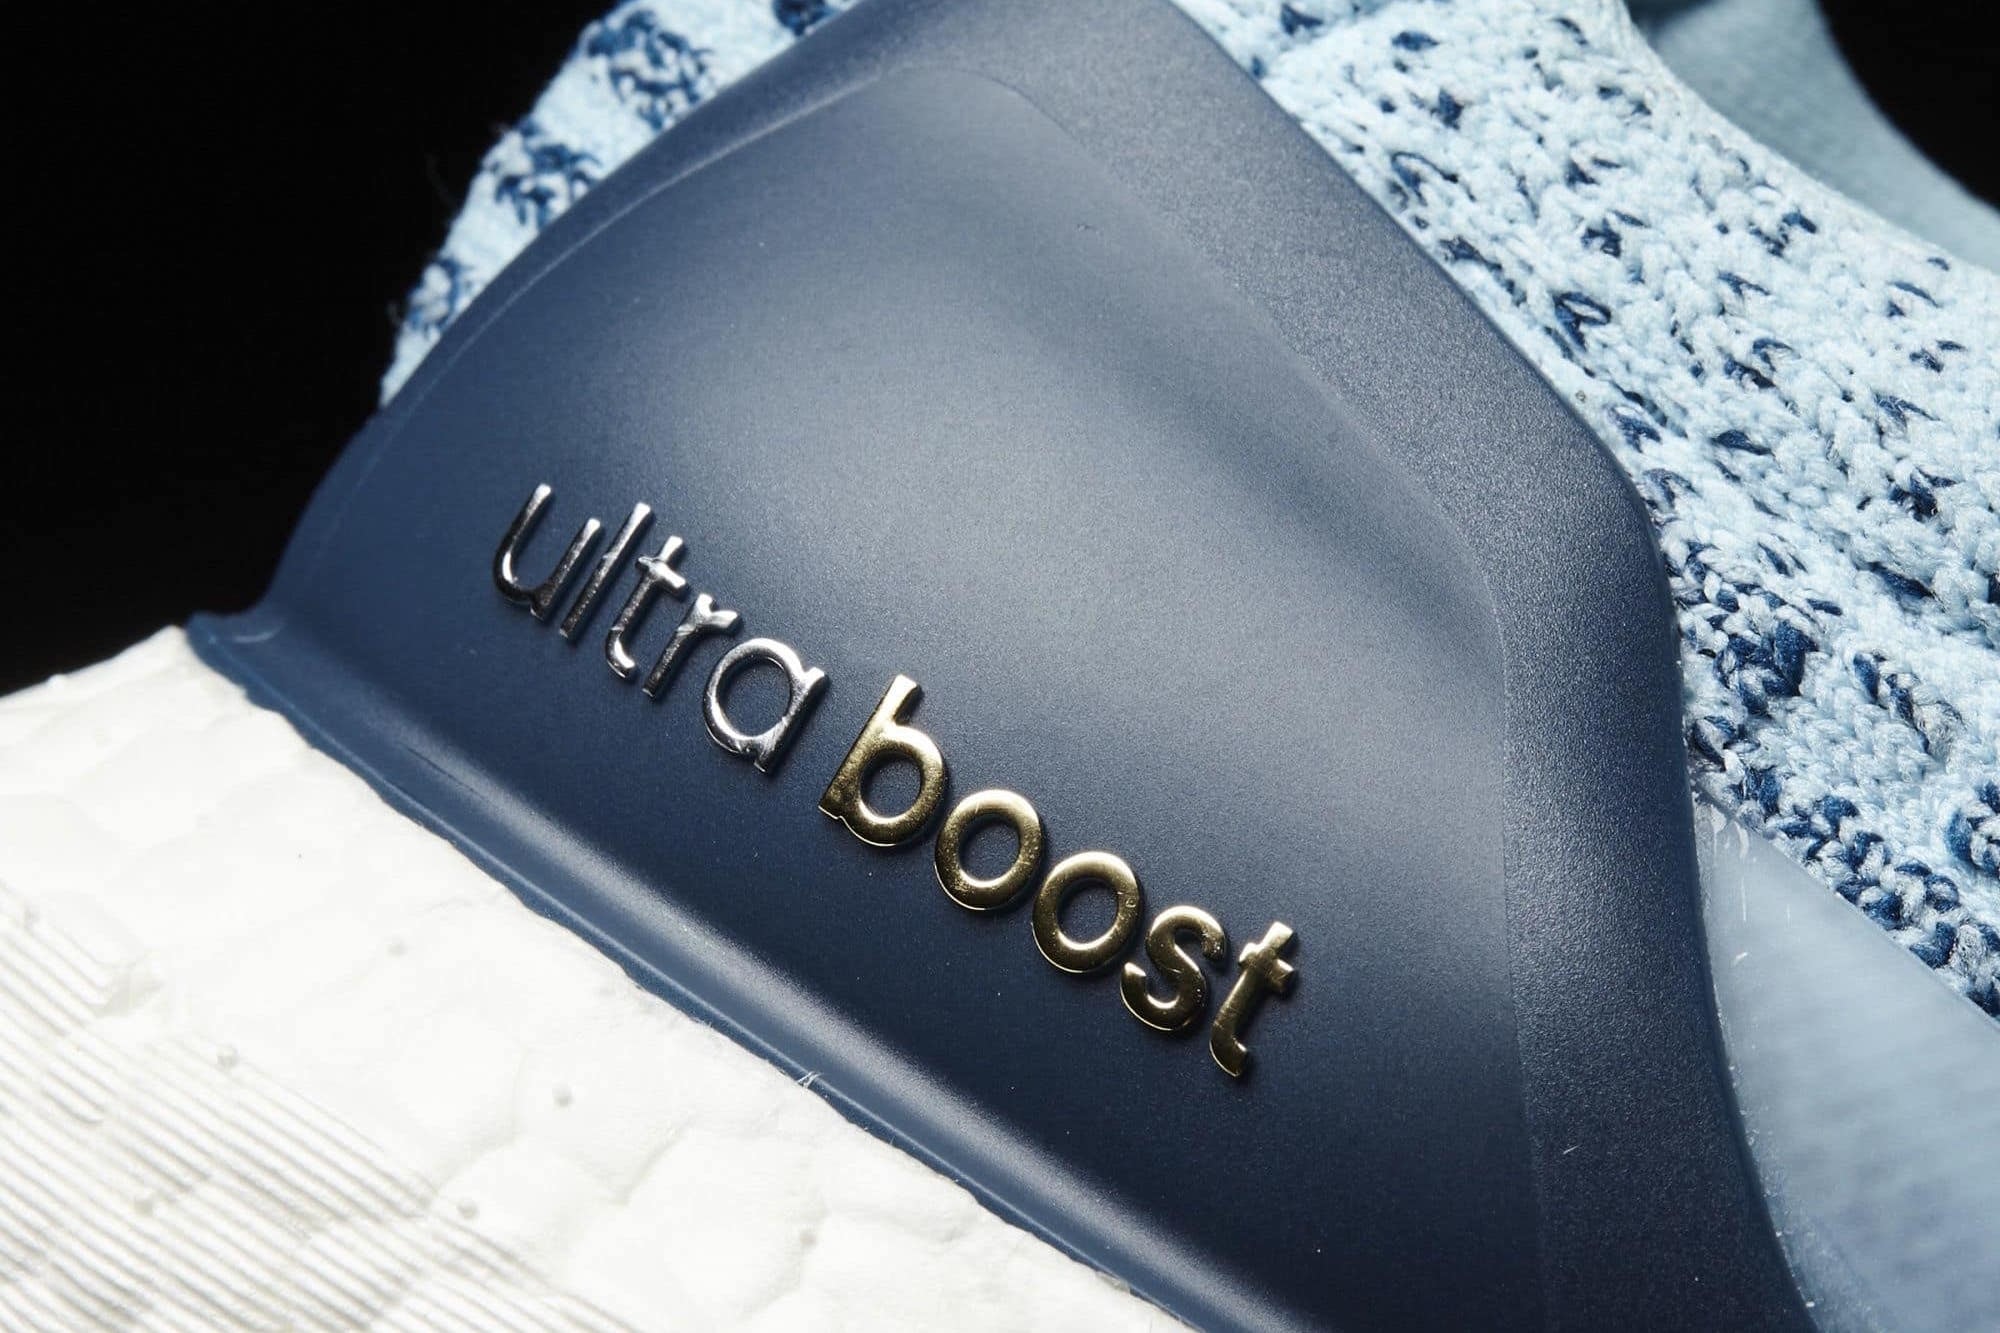 adidas UltraBOOST 3.0 “Icy Blue”